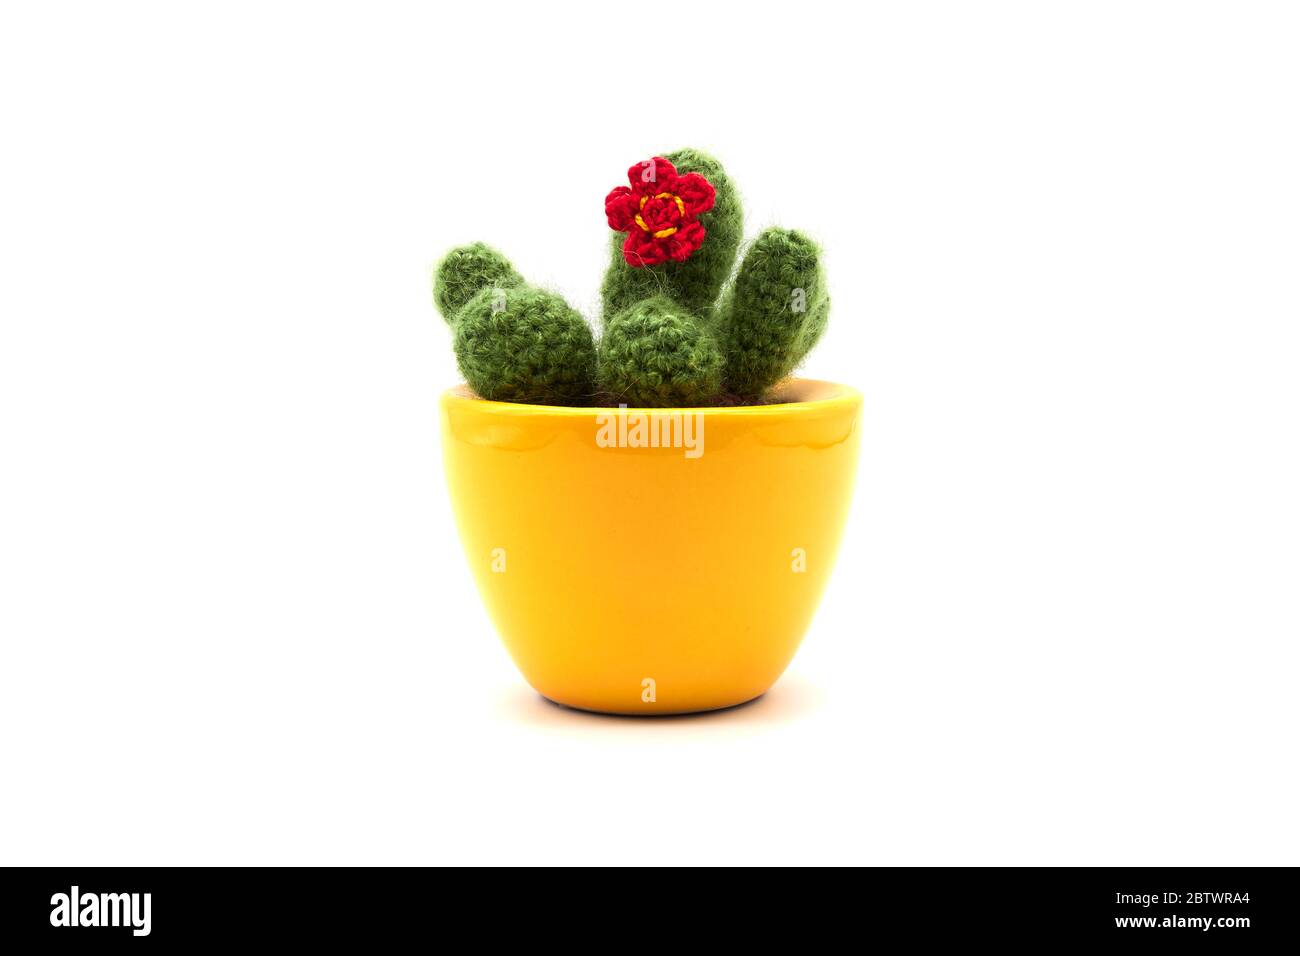 Green Ceramic Cactus Stacking Measuring Cups, Red Cactus Flower